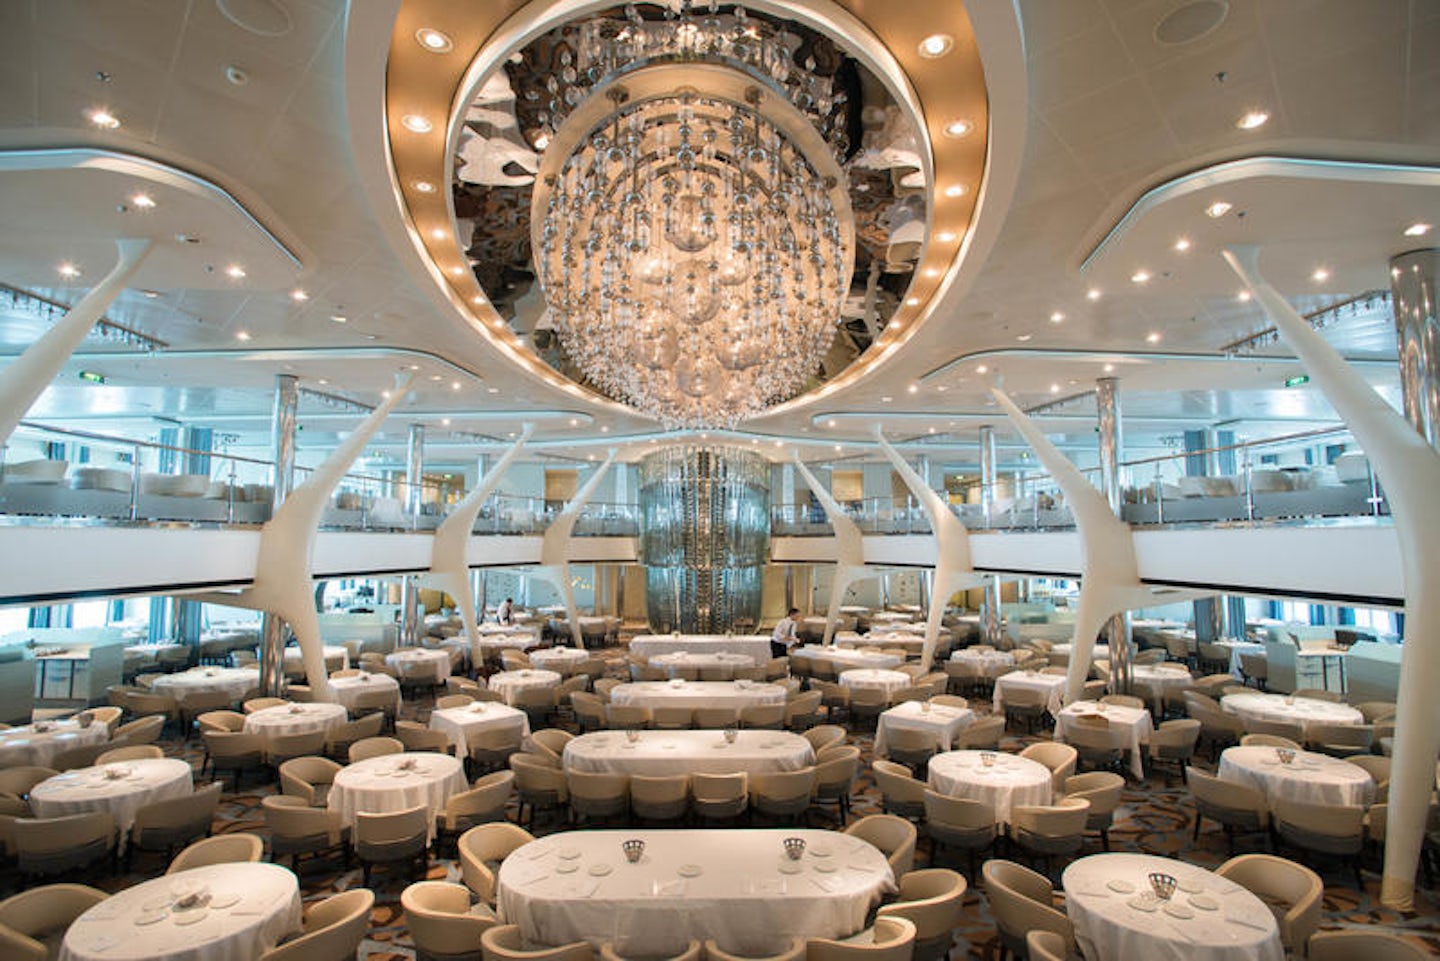 Moonlight Sonata Dining Room on Celebrity Eclipse Cruise Ship Cruise